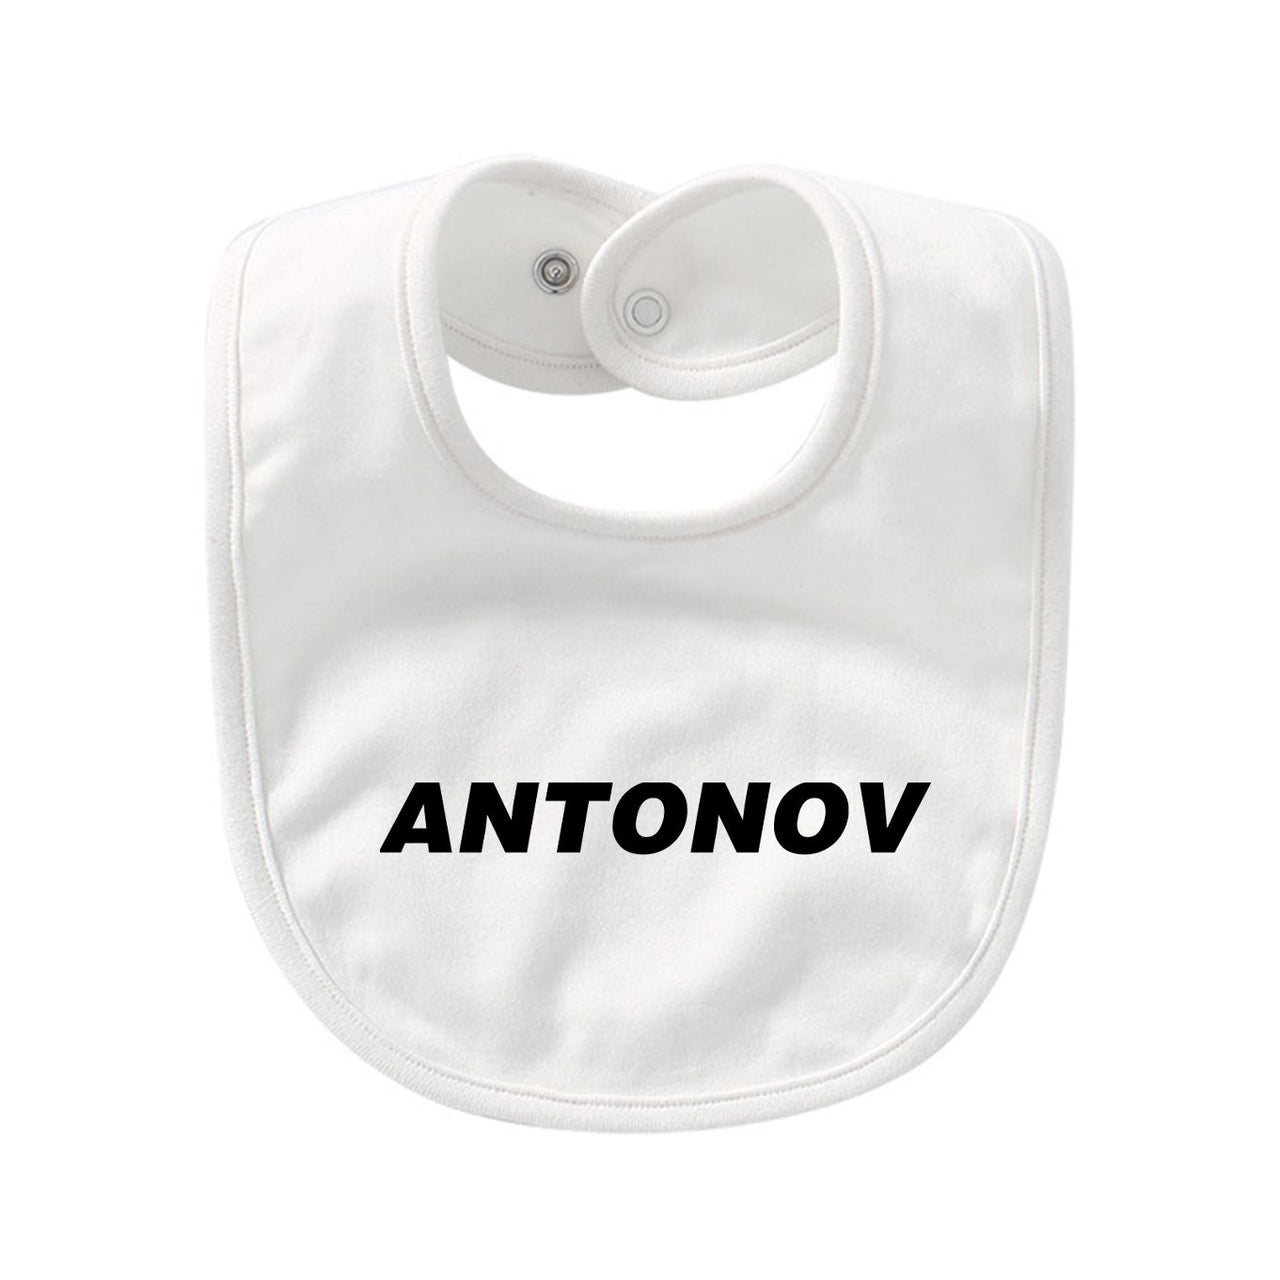 Antonov & Text Designed Baby Saliva & Feeding Towels